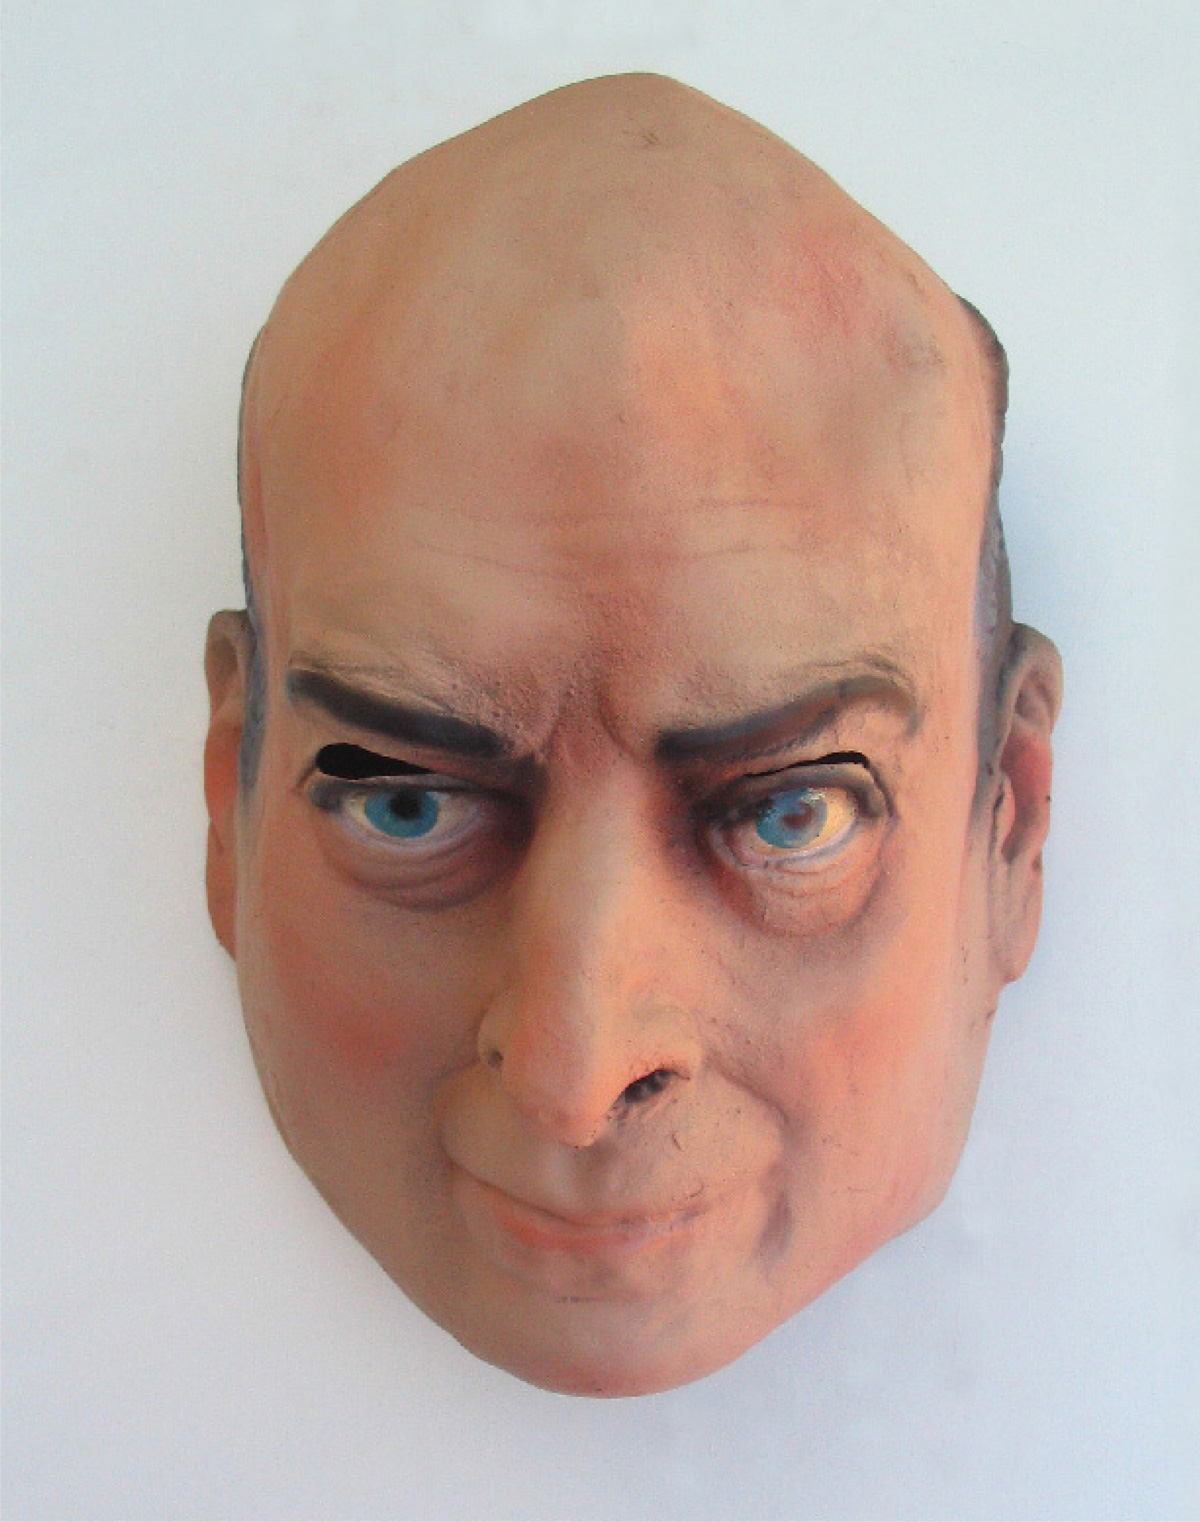 Mask of Domingo Cavallo, Minister of Economy in Argentina,
1991–1996. Thanks to Lara Correa. Photo Josefina Tommasi.